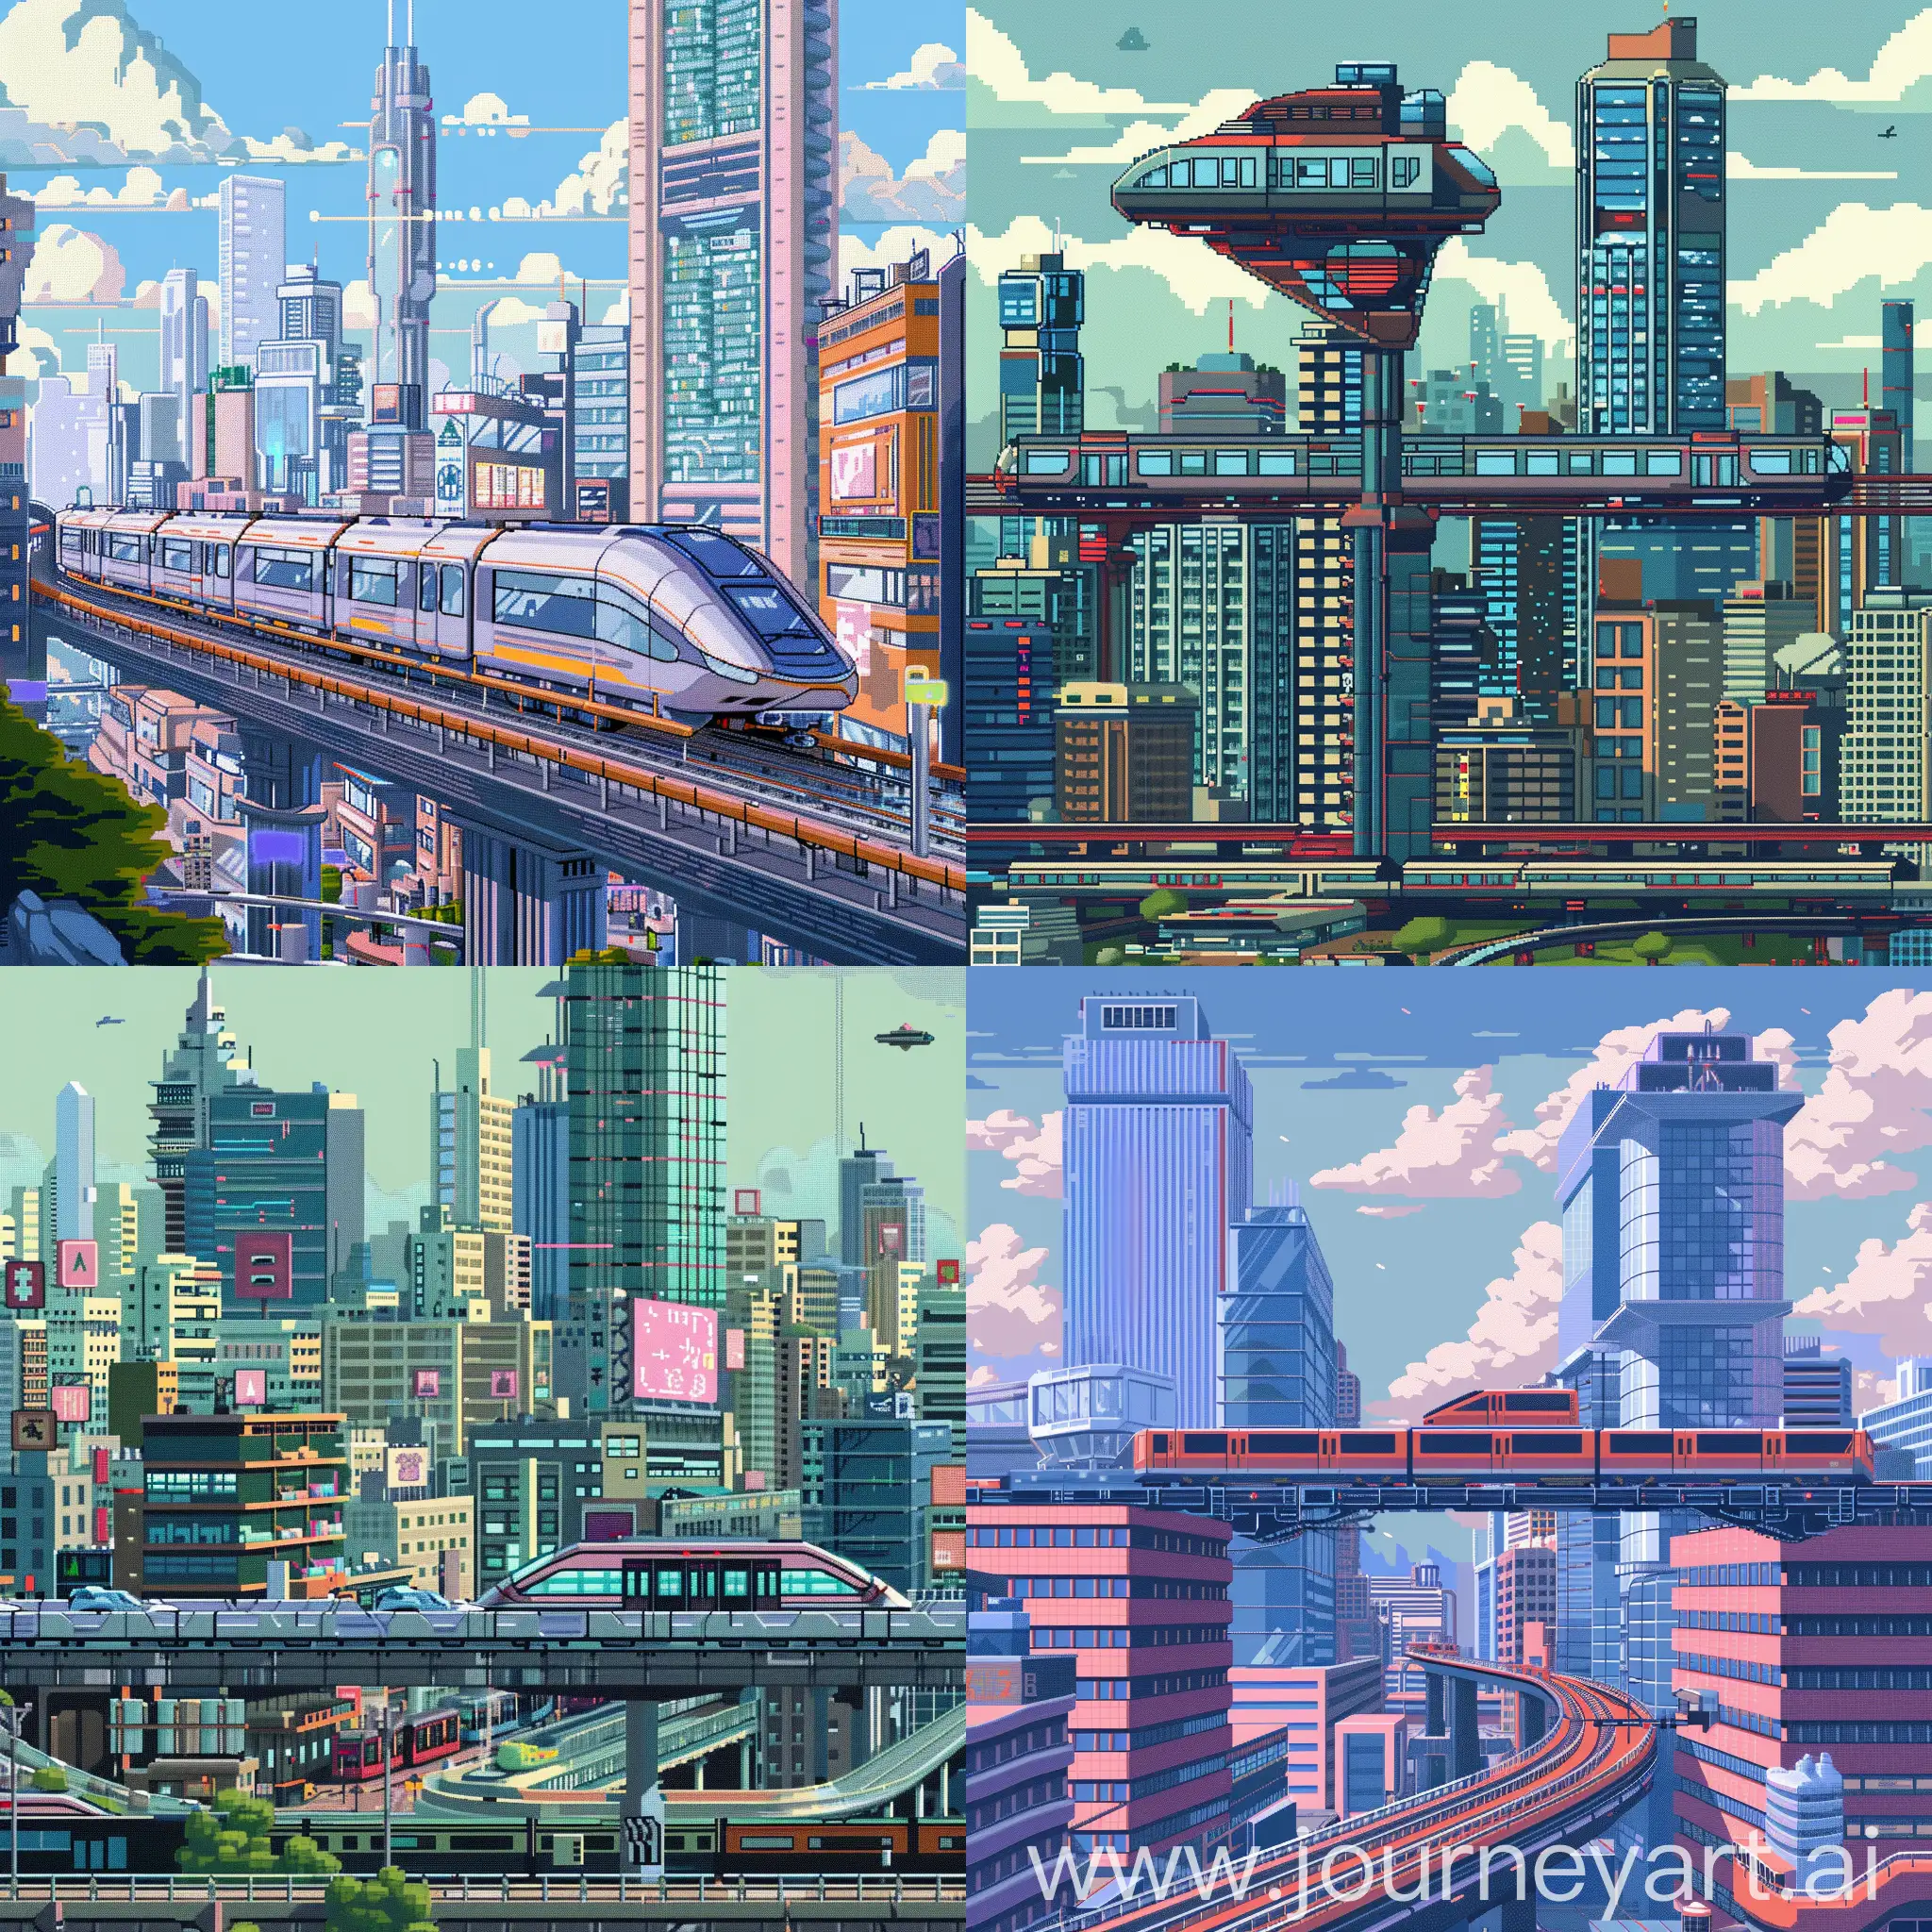 Futuristic-Pixel-Art-Cityscape-GlassEncased-Buildings-and-Monorail